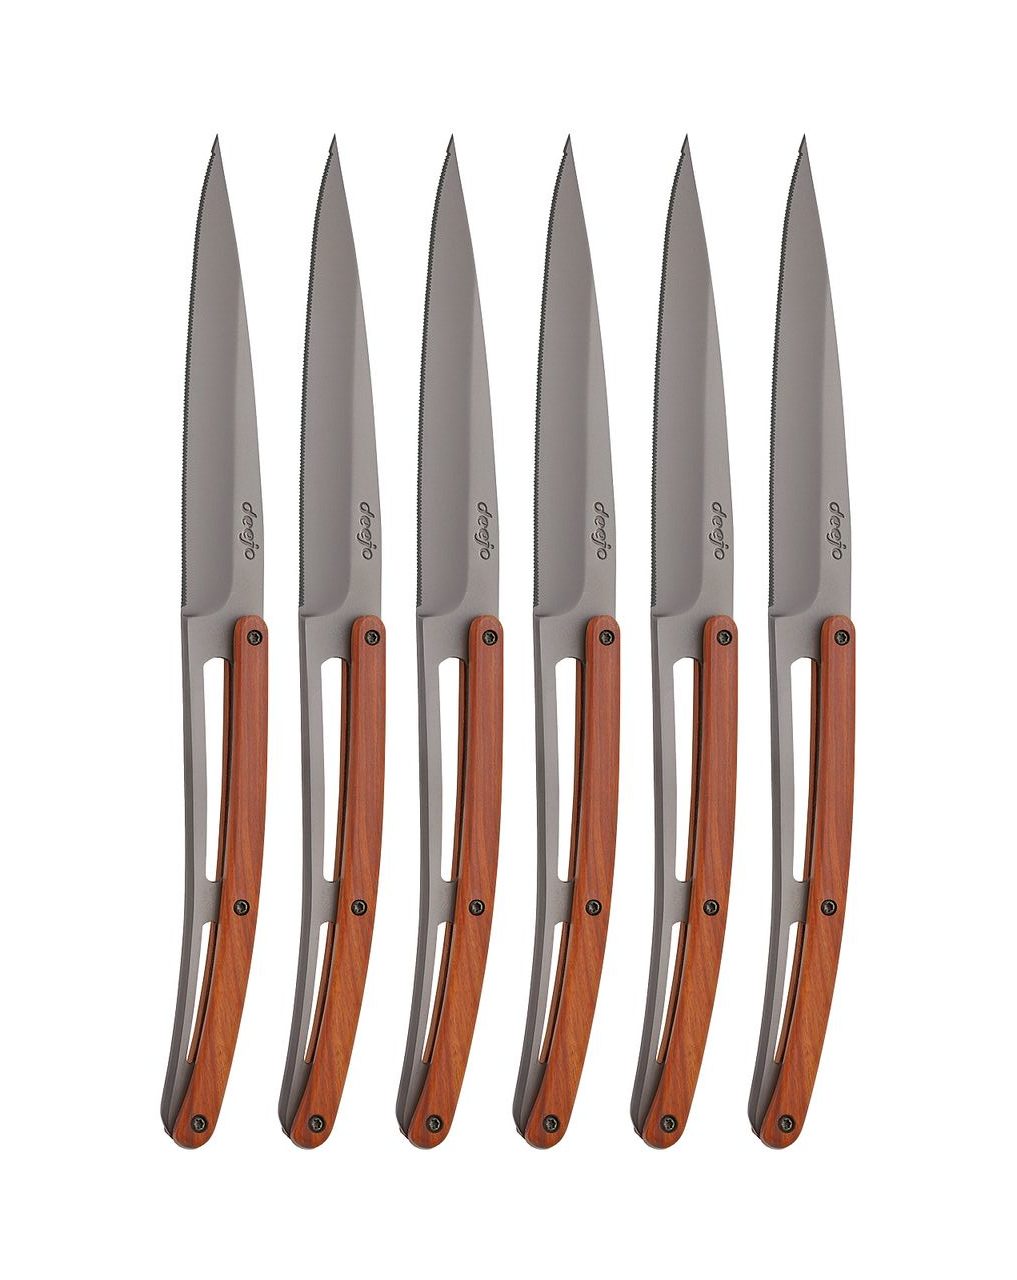 https://deejo.com.au/wp-content/uploads/2022/07/deejo-steak-knives-set6-titanium-finish-coralwood-serrated-rotated.jpg